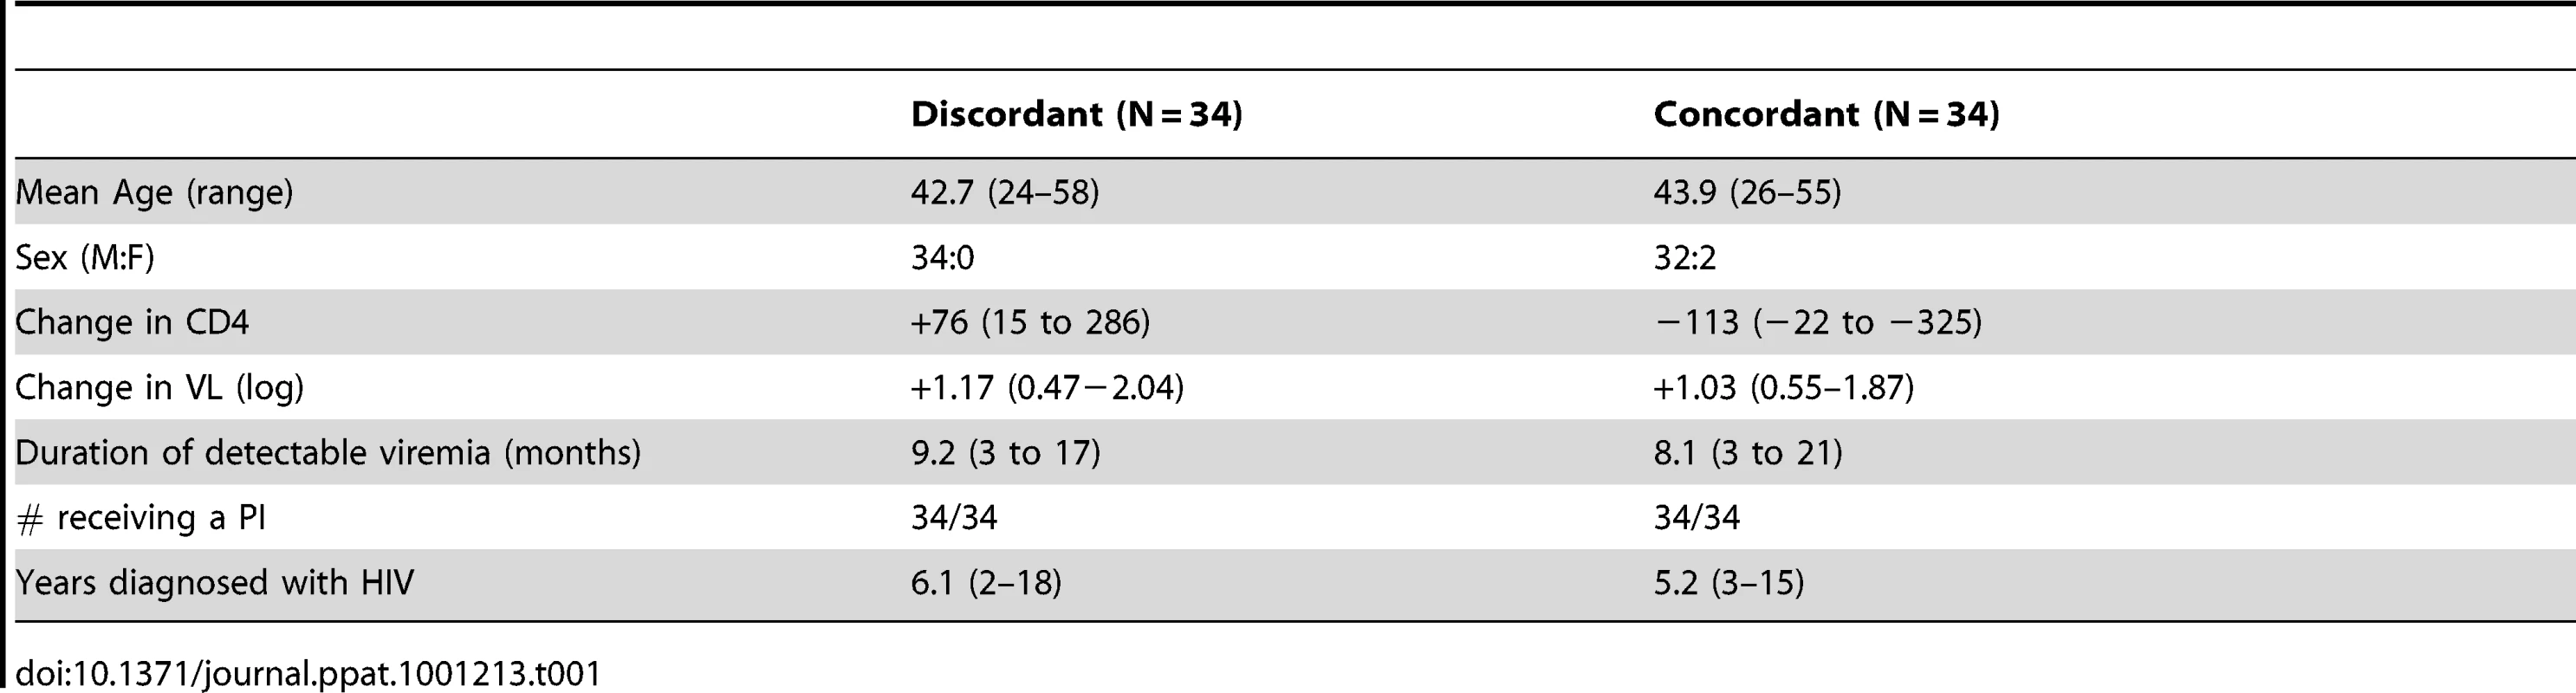 Demographics of discordant and concordant patients.